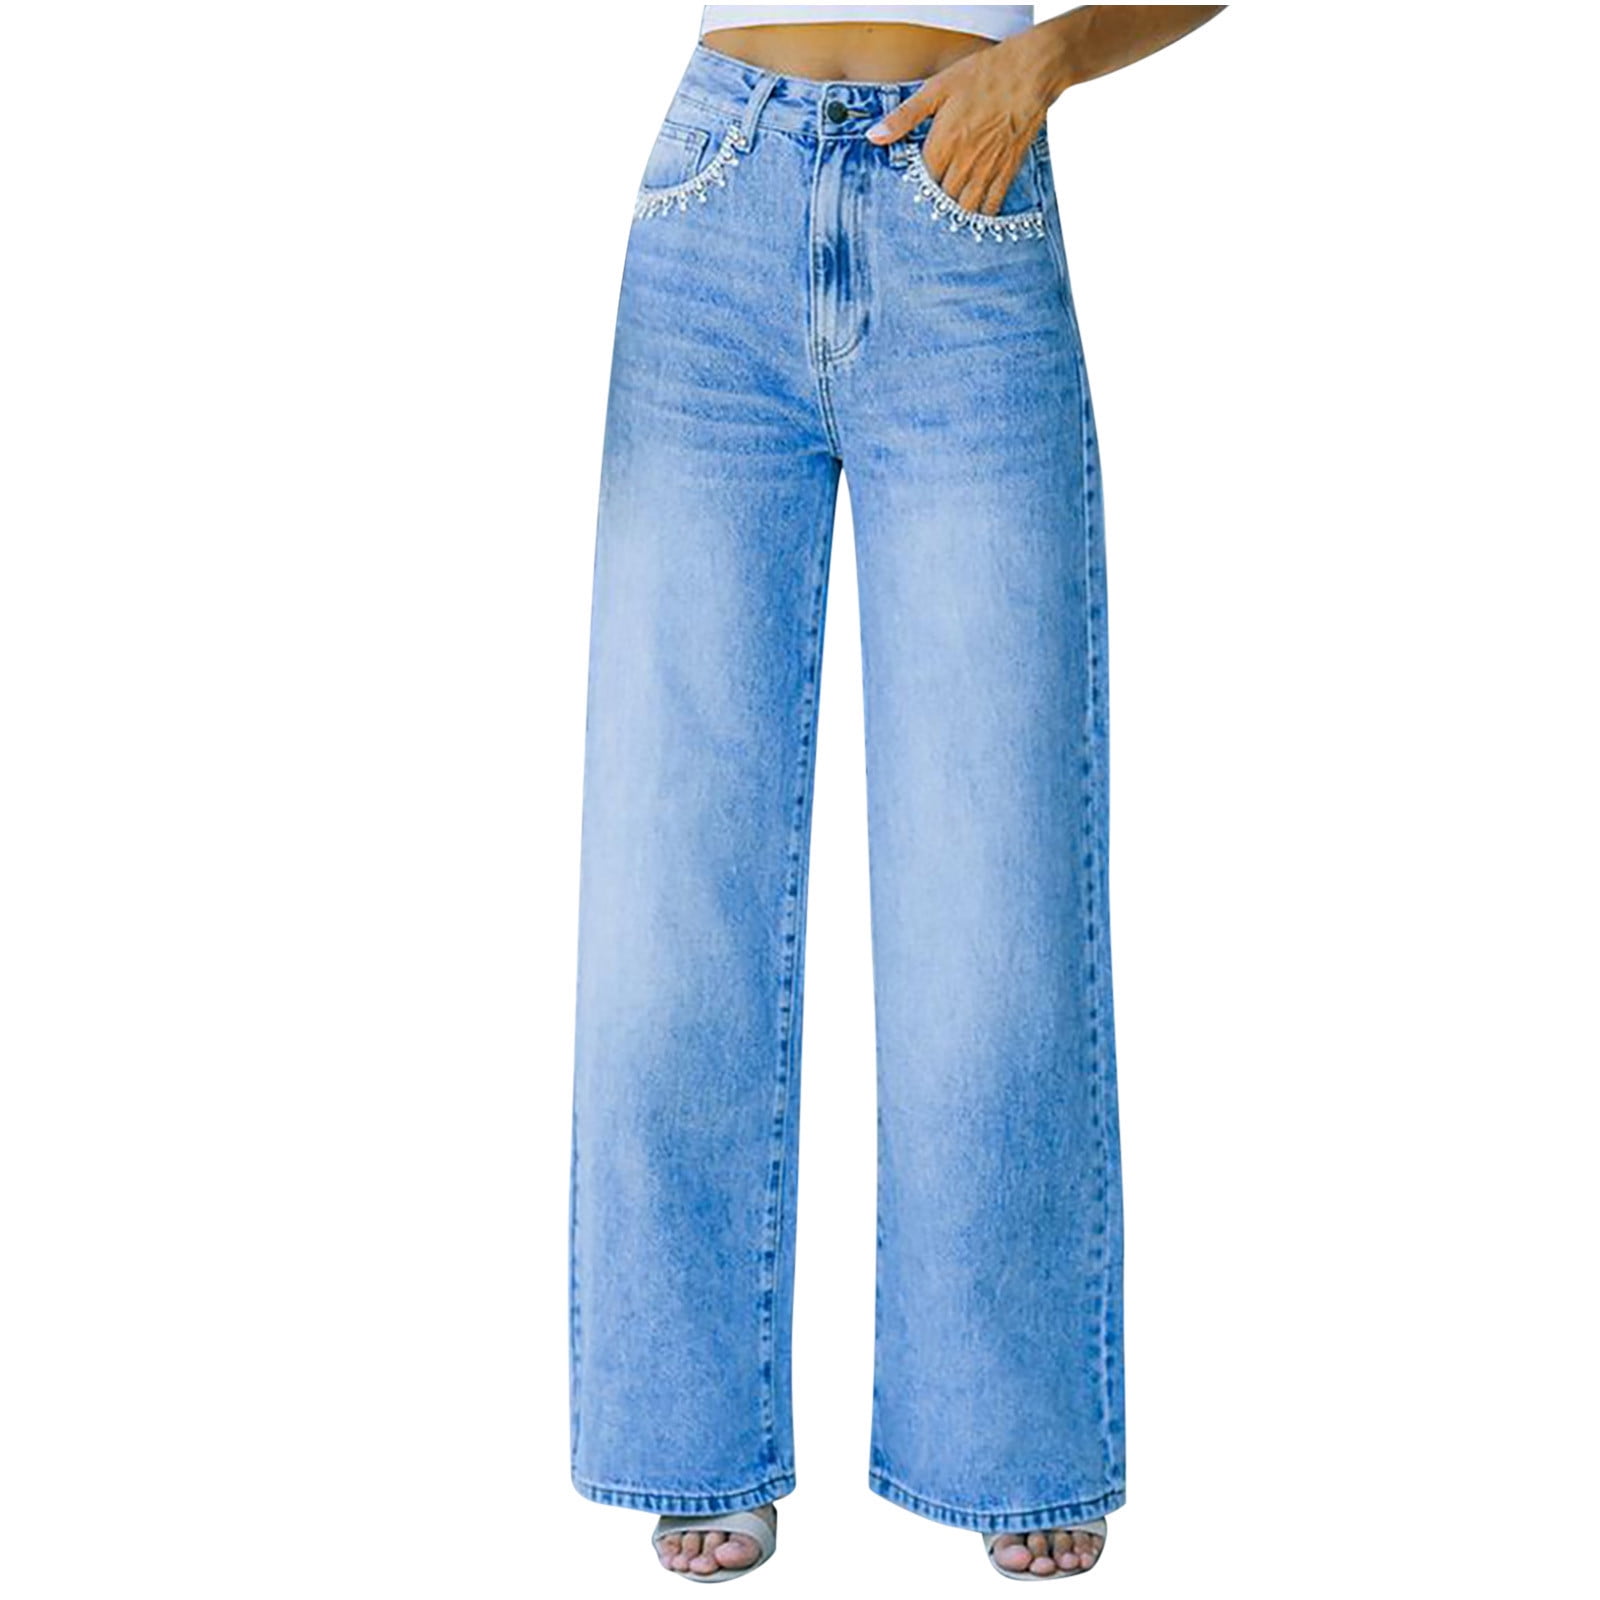 D Jeans Button Fly Jeans Women's Size 8 Blue Light Wash Denim Straight  Stretch